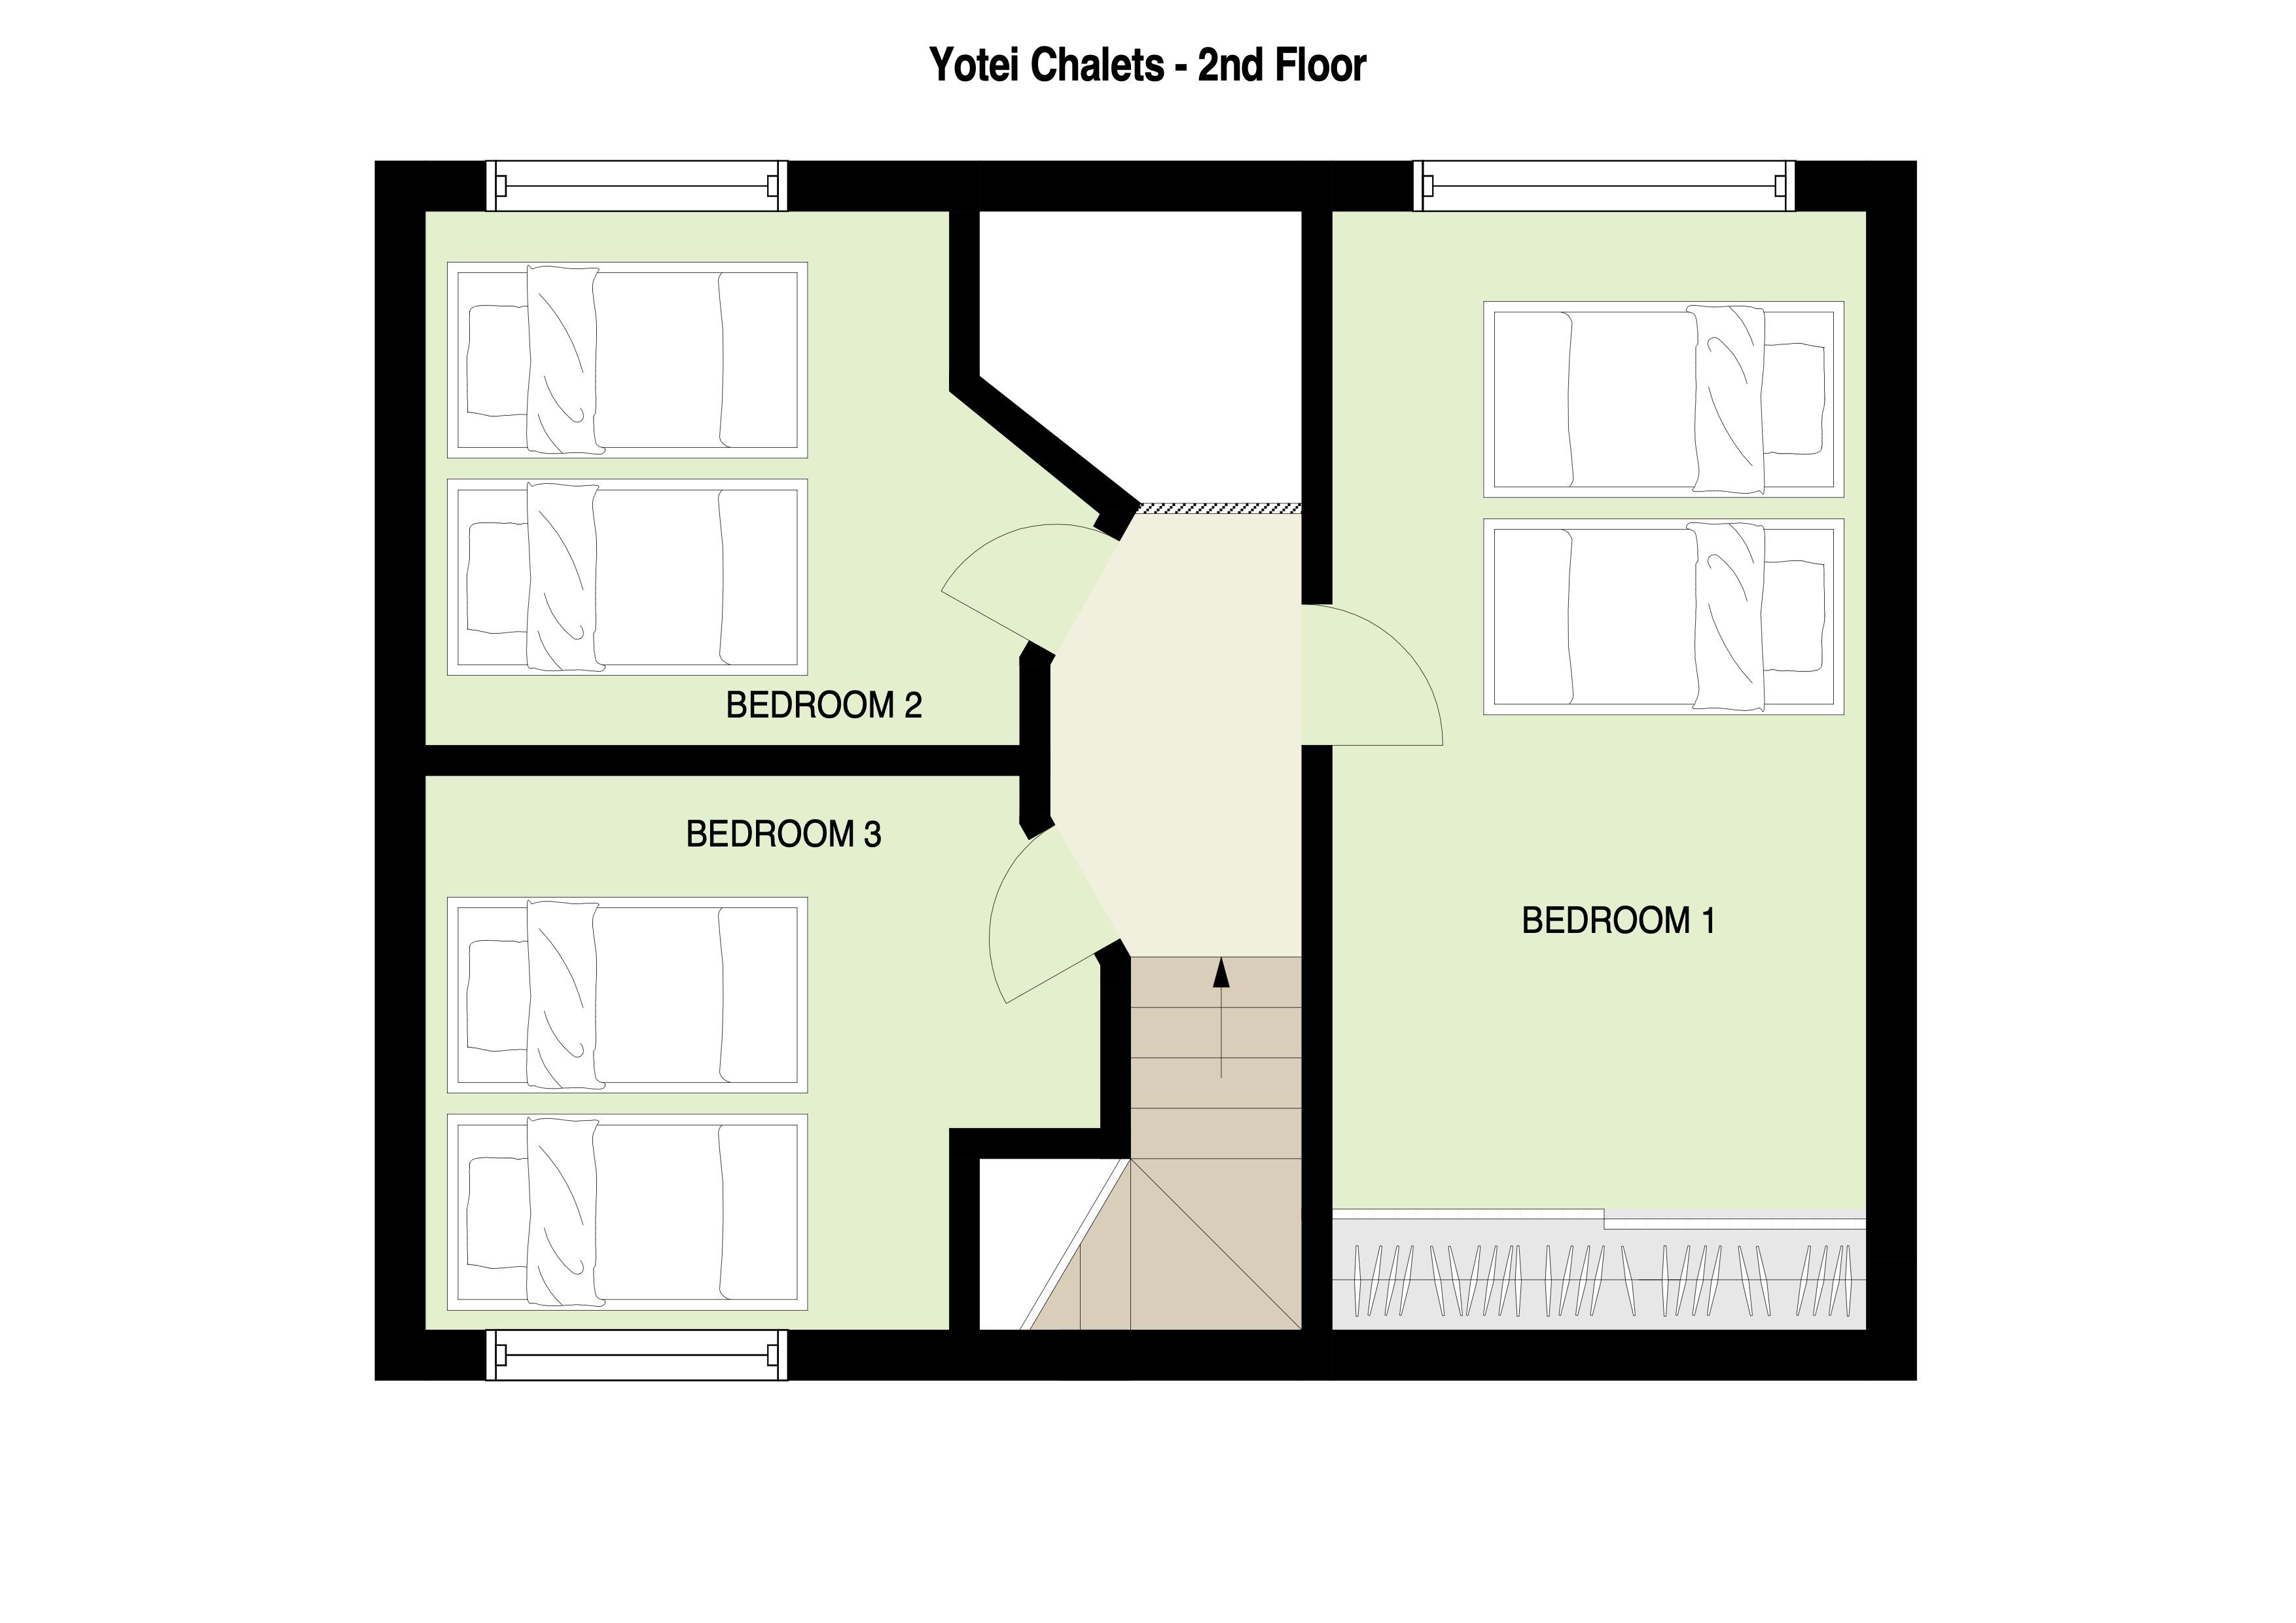 Yotei Chalets Second Floor Plans